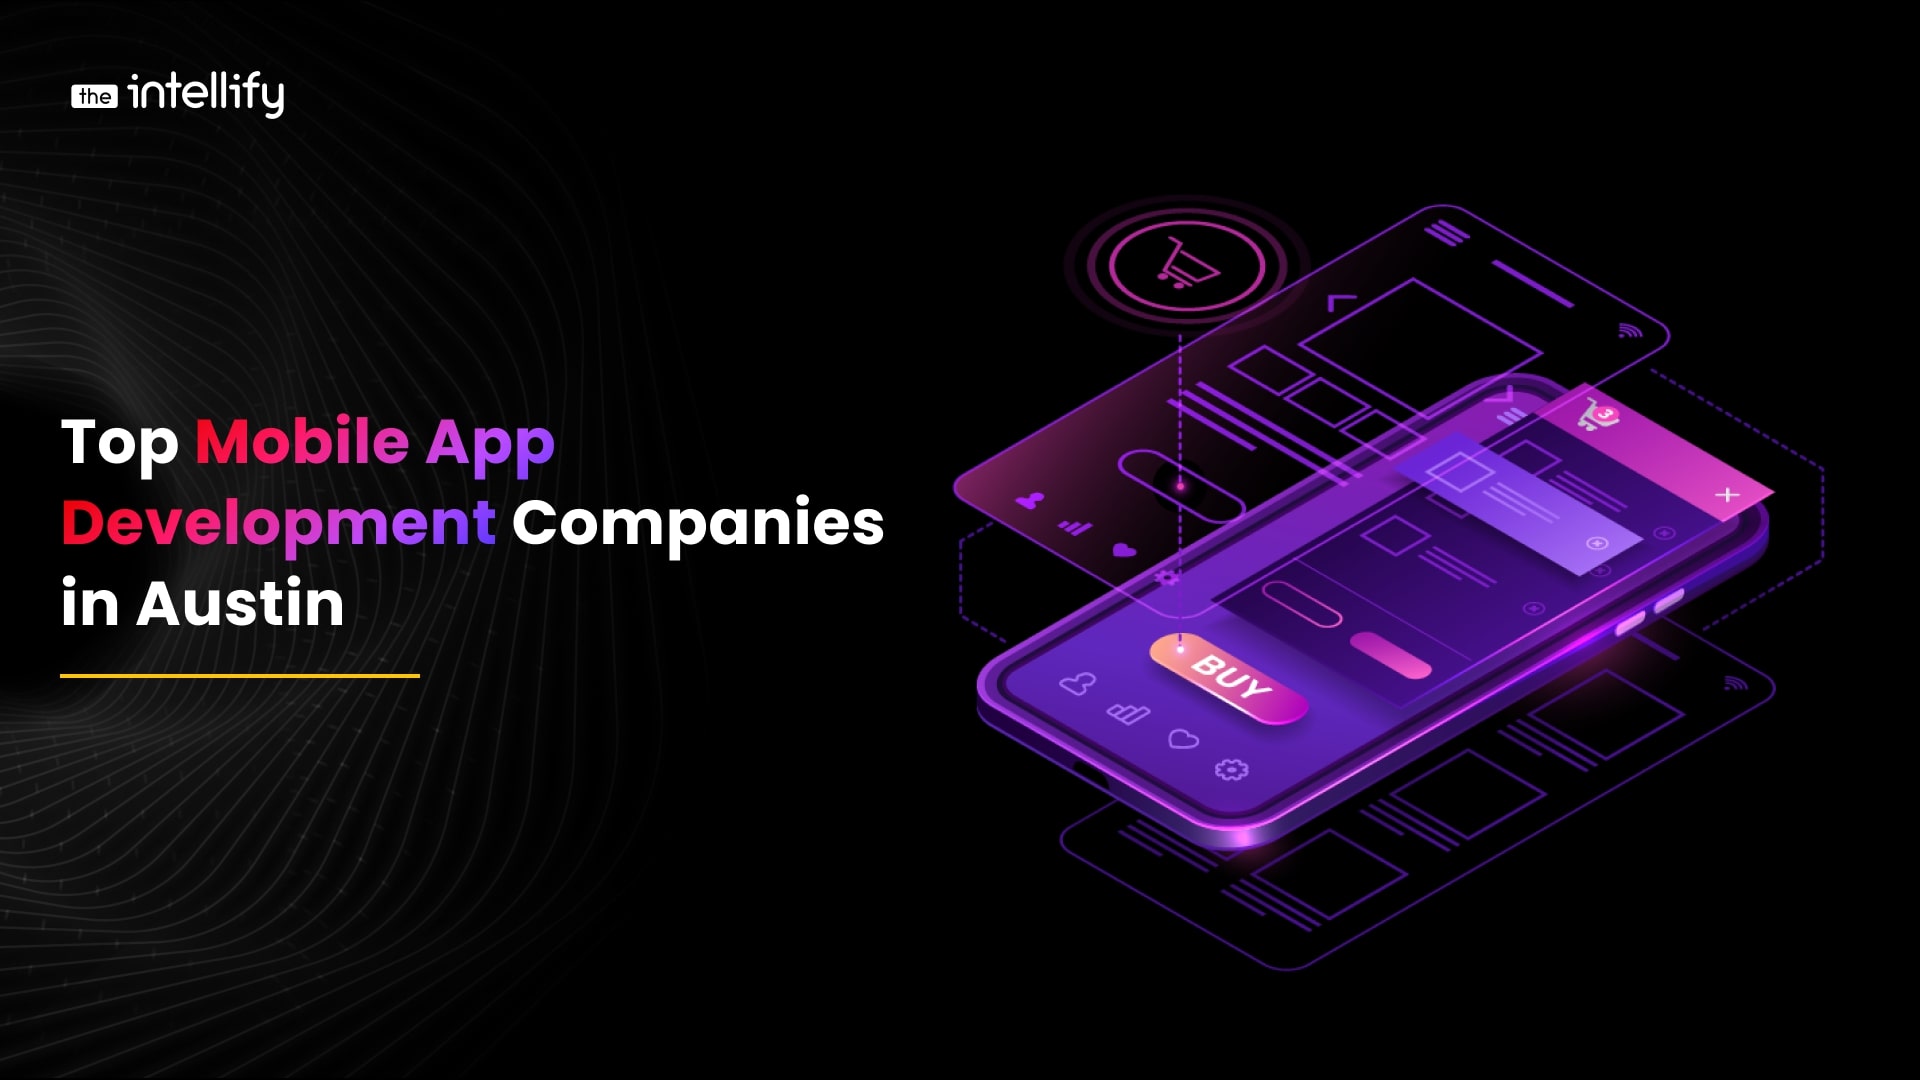 Top Mobile App Development Companies in Austin